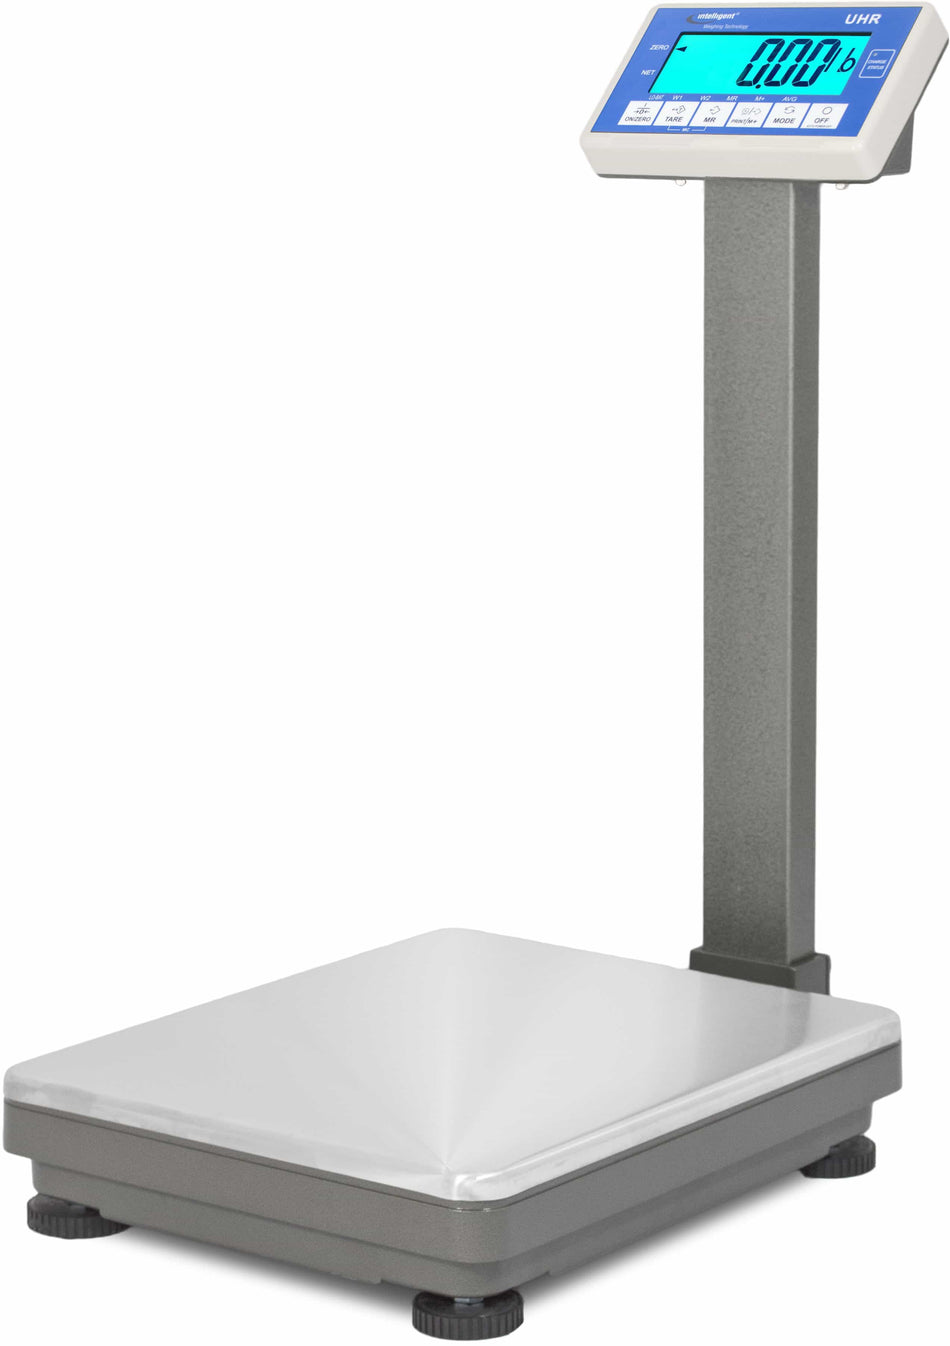 Intelligent Weighing UHR-150FL High Precision Laboratory Bench Scale, 150000 g x 5 g